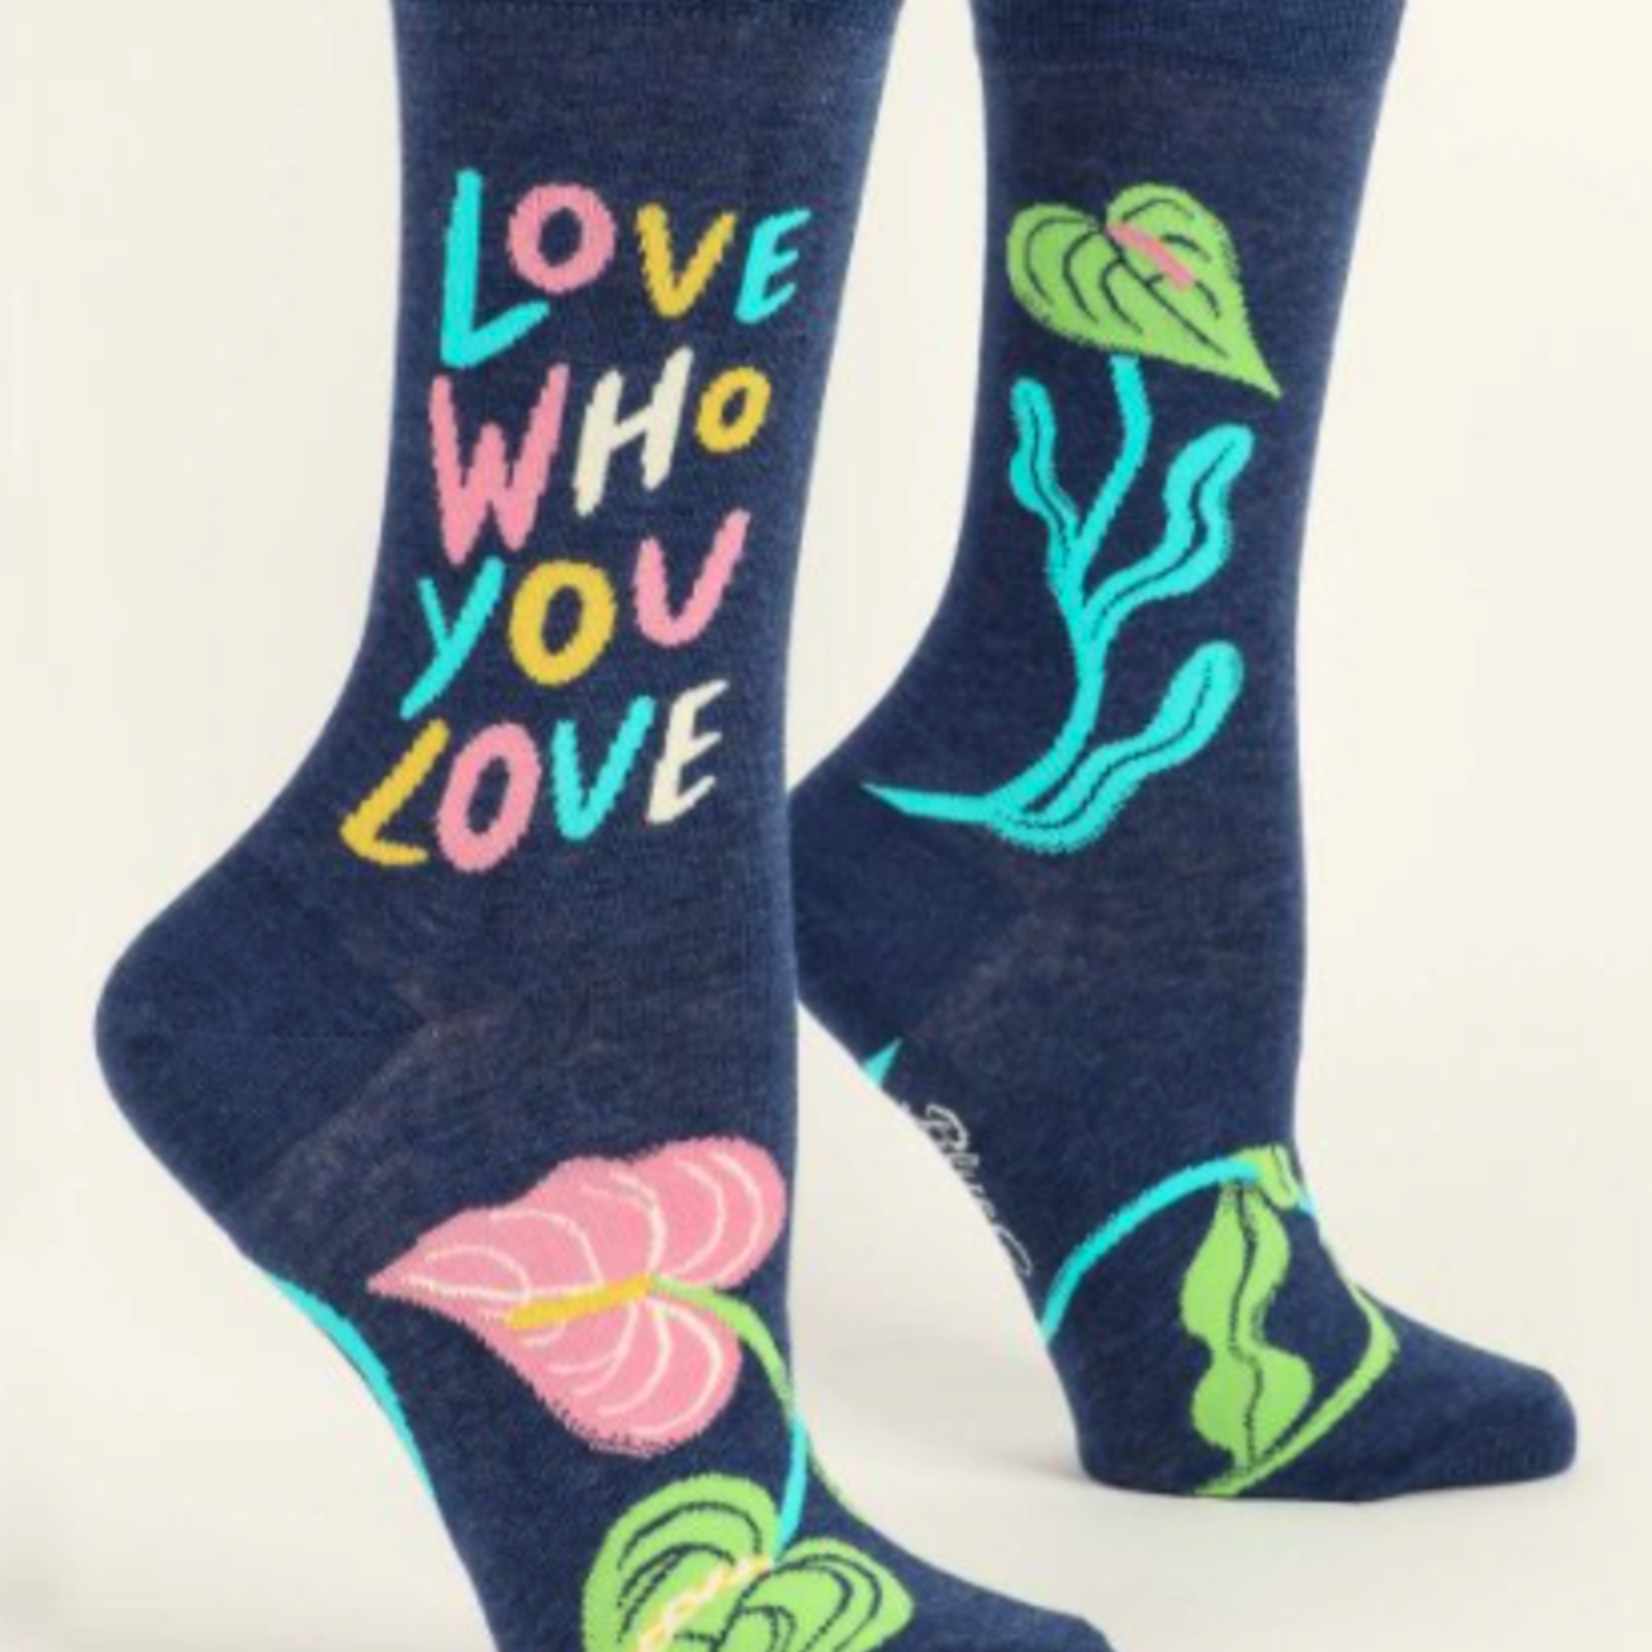 Blue Q Blue Q - Crew Socks - Love Who You Love